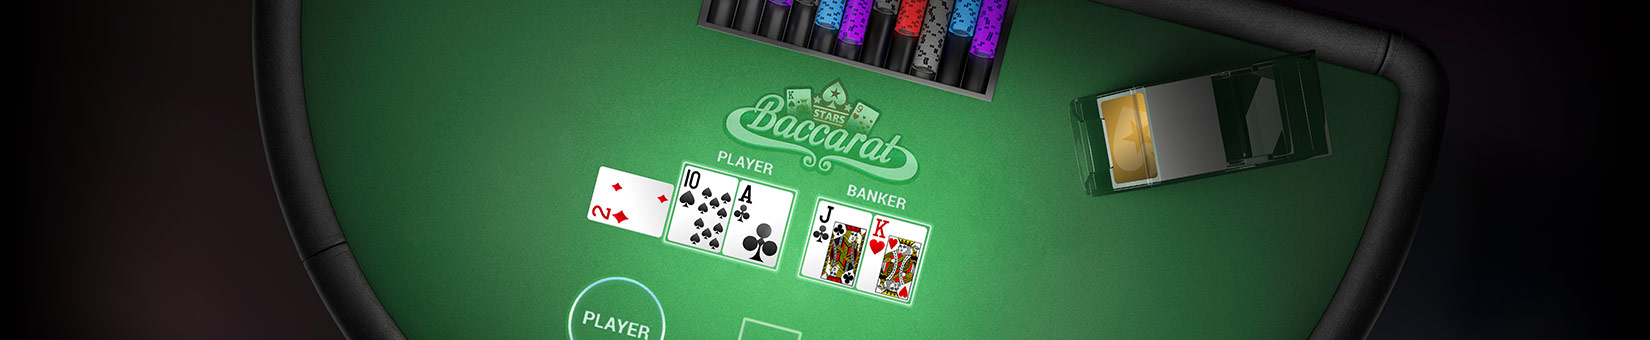 888 poker movil casino online que aceptan AstroPay 462863